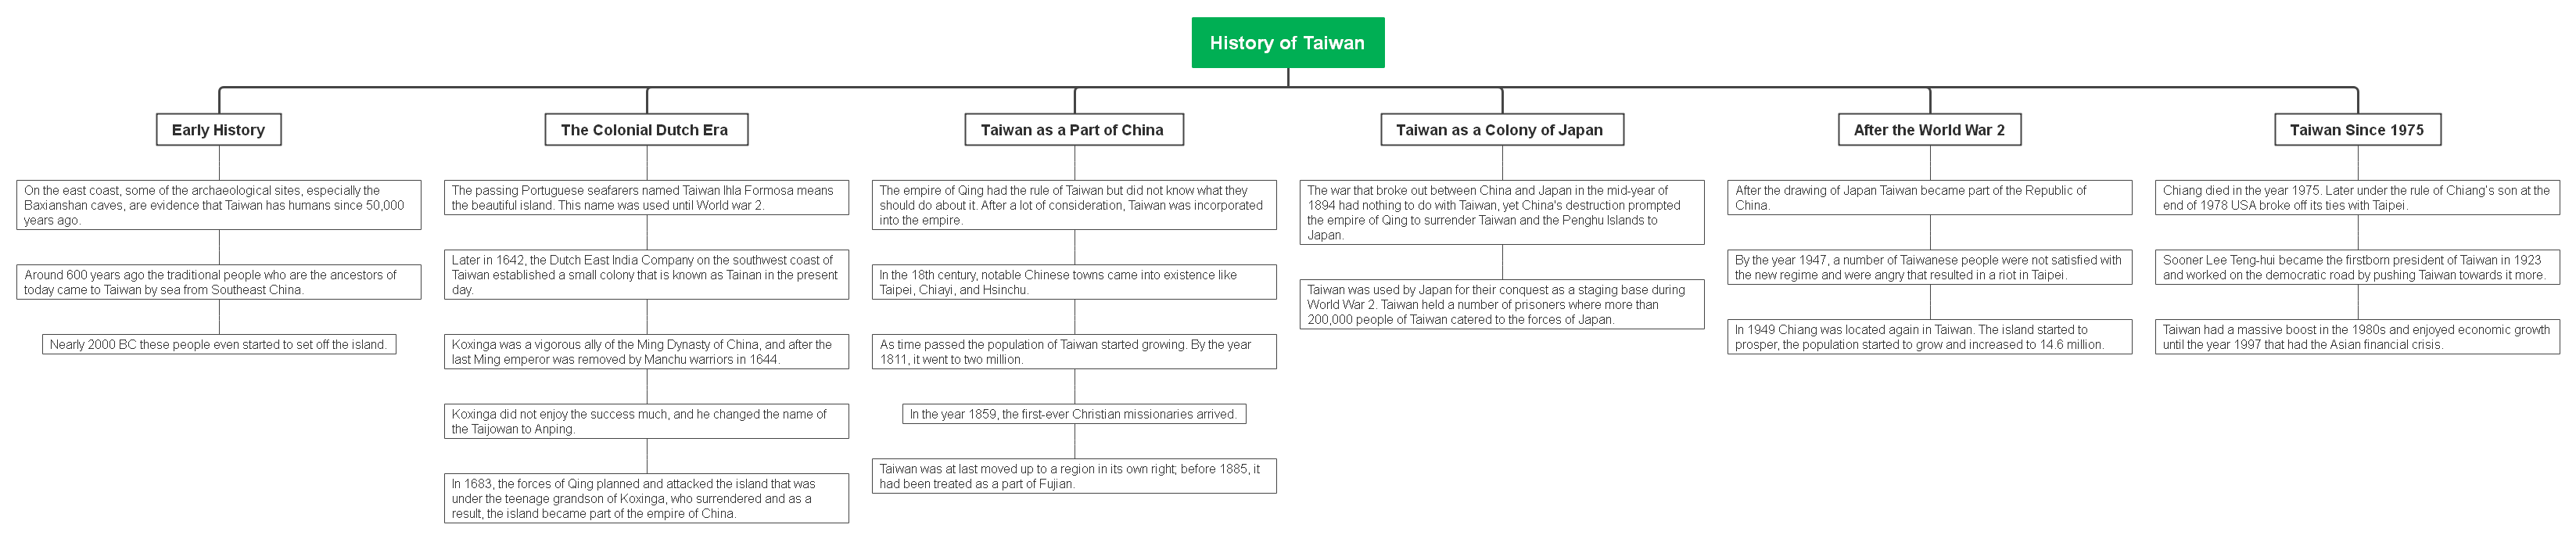 history of taiwan